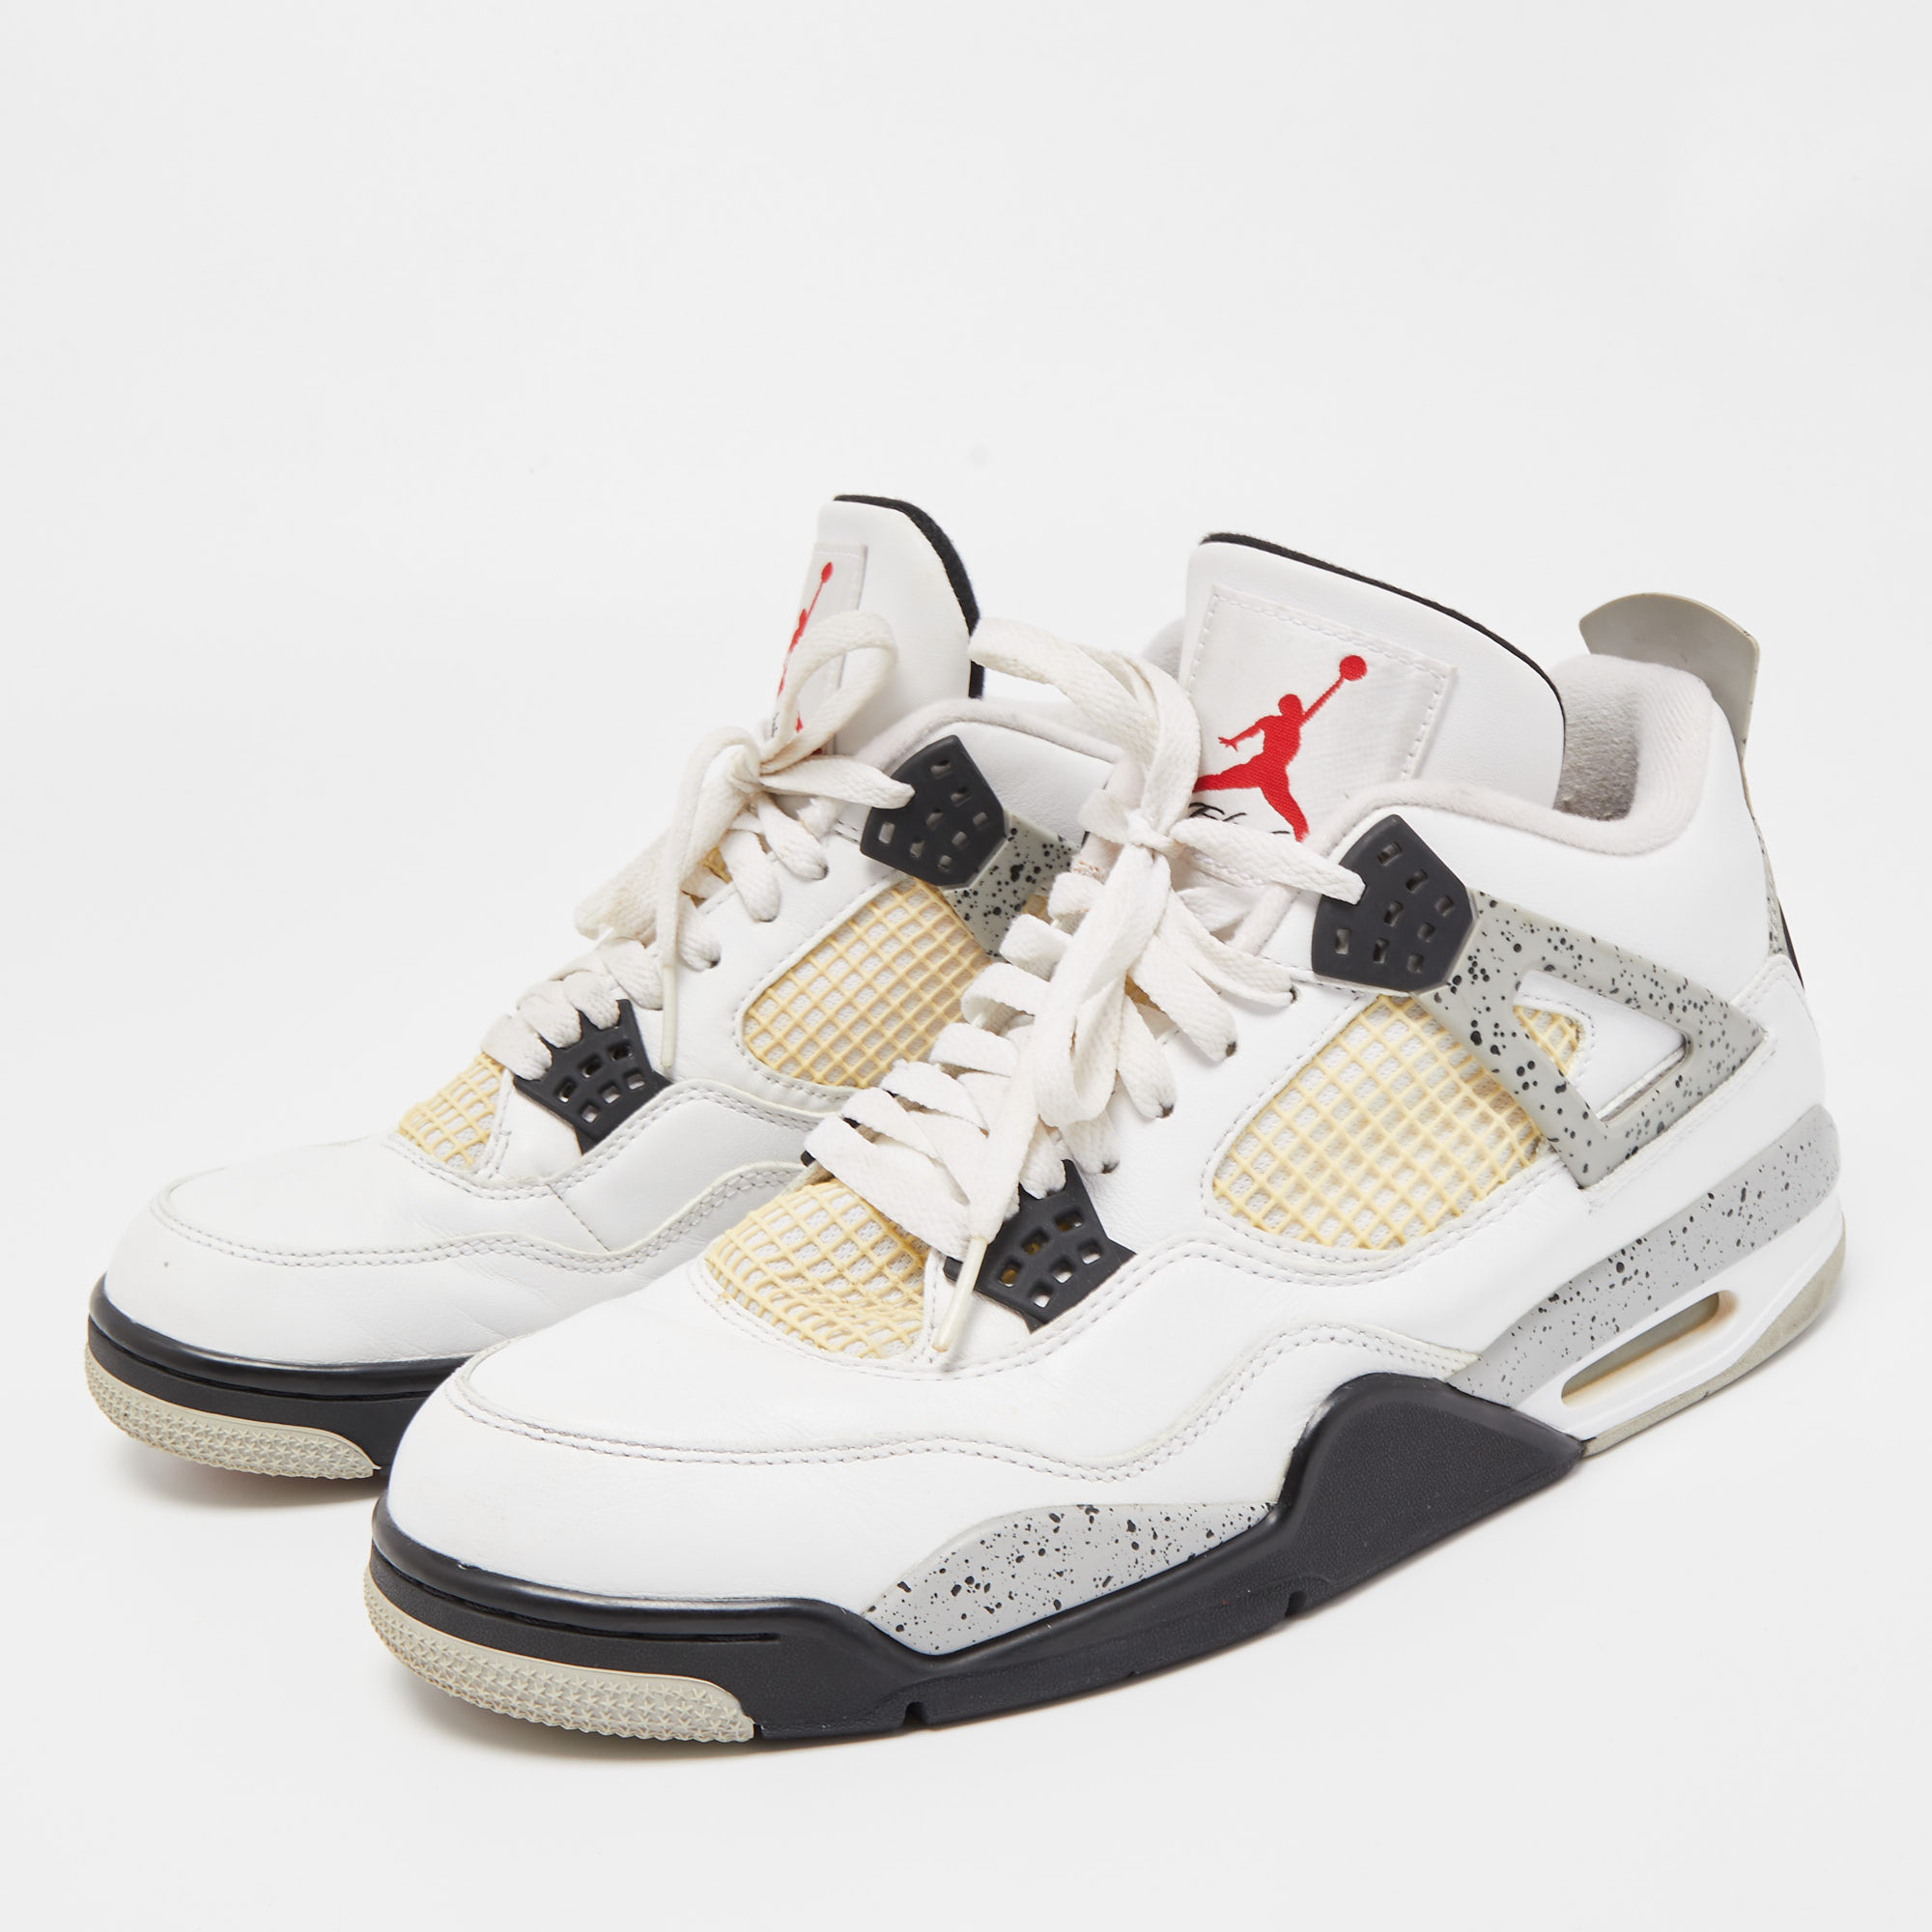 

Air Jordans White Leather Jordan 4 Retro White Cement Sneakers Size